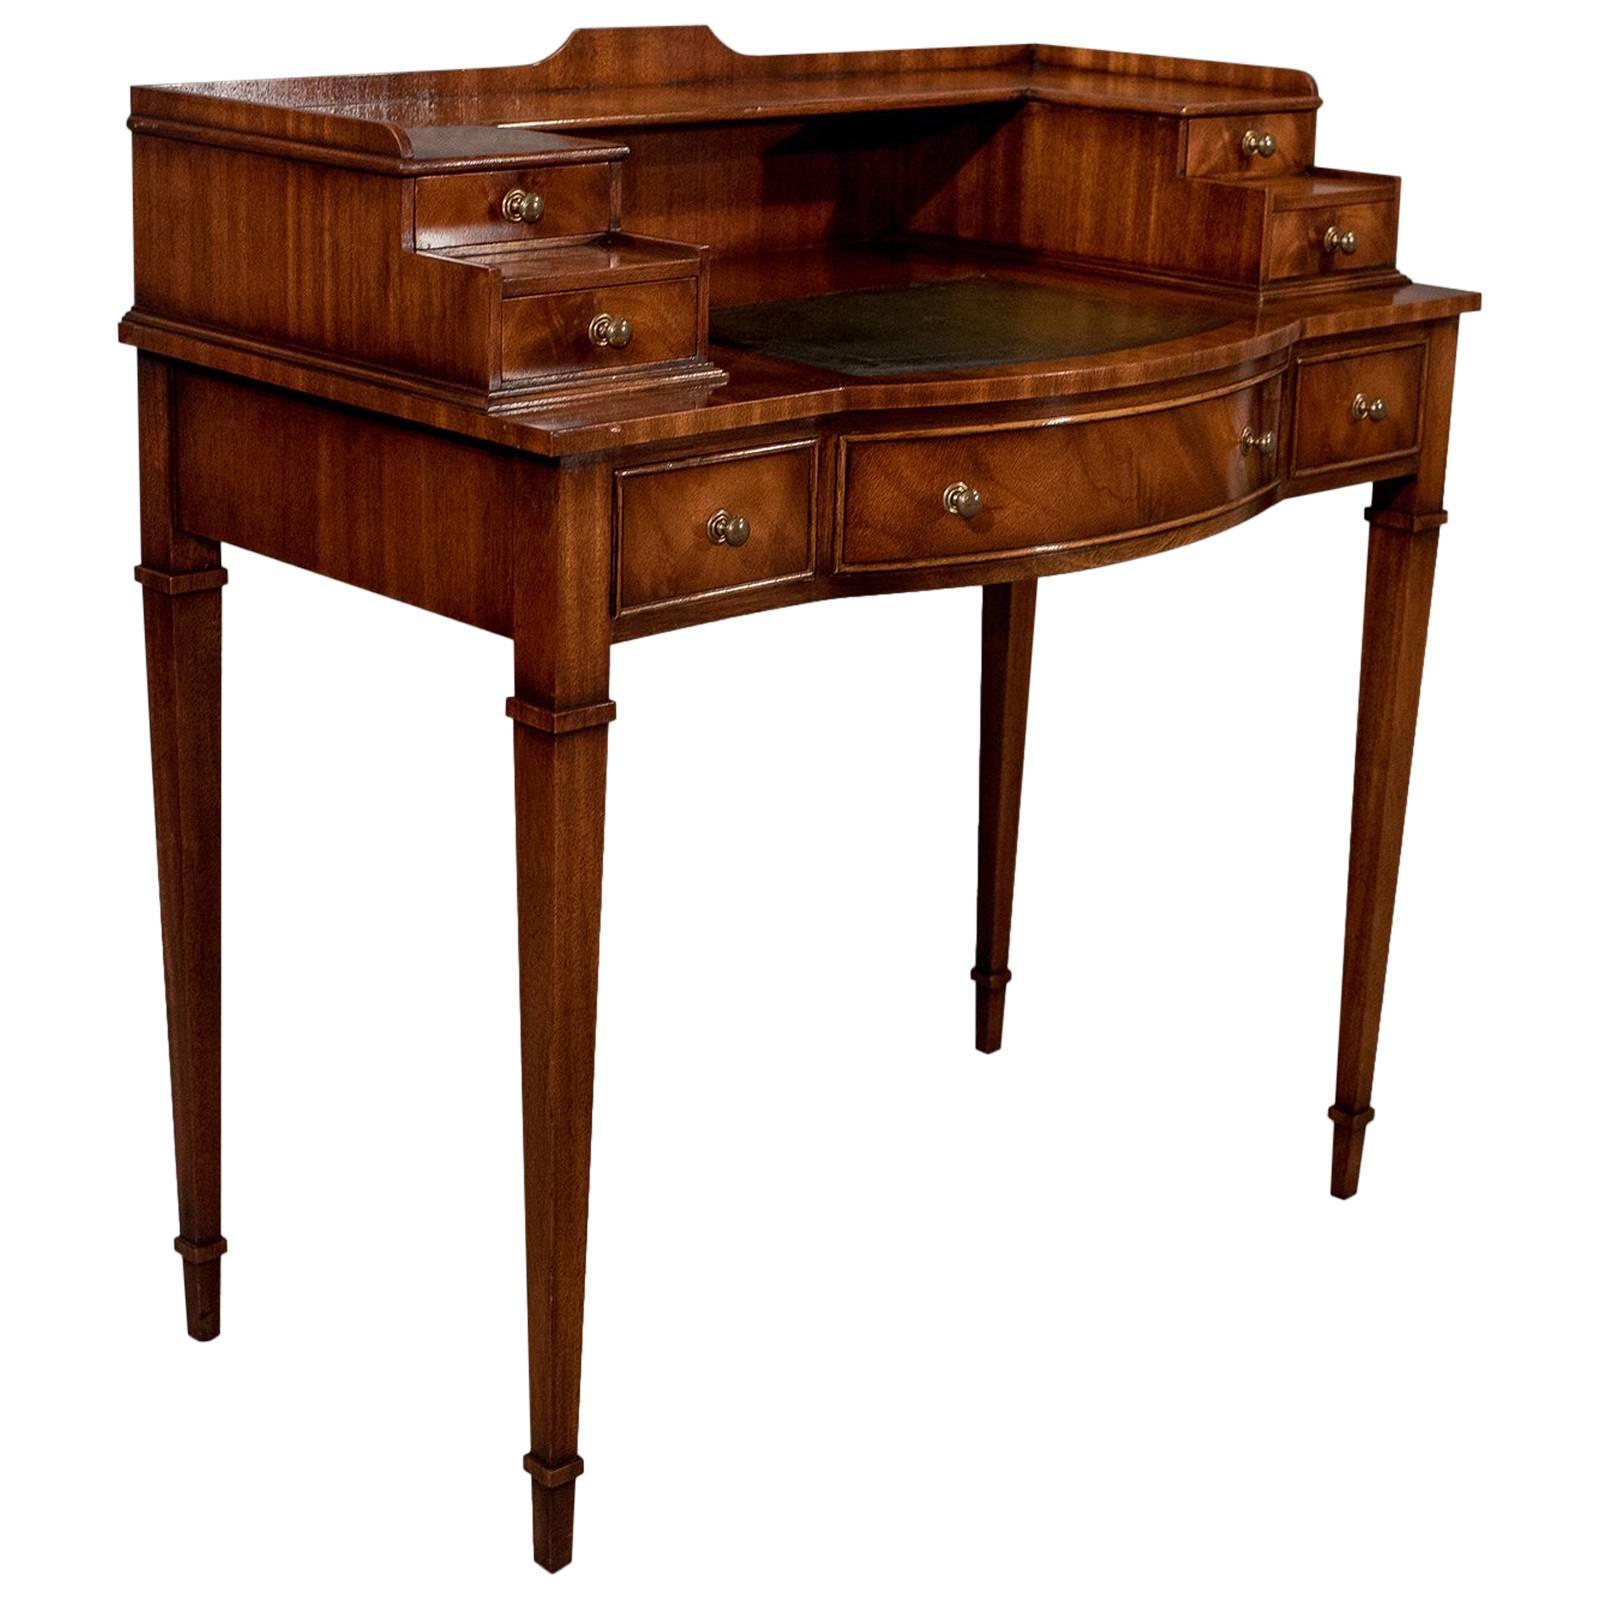 Writing Desk, Antique Sheraton Taste, Mahogany, Leather Top, Table, Bureau C20th